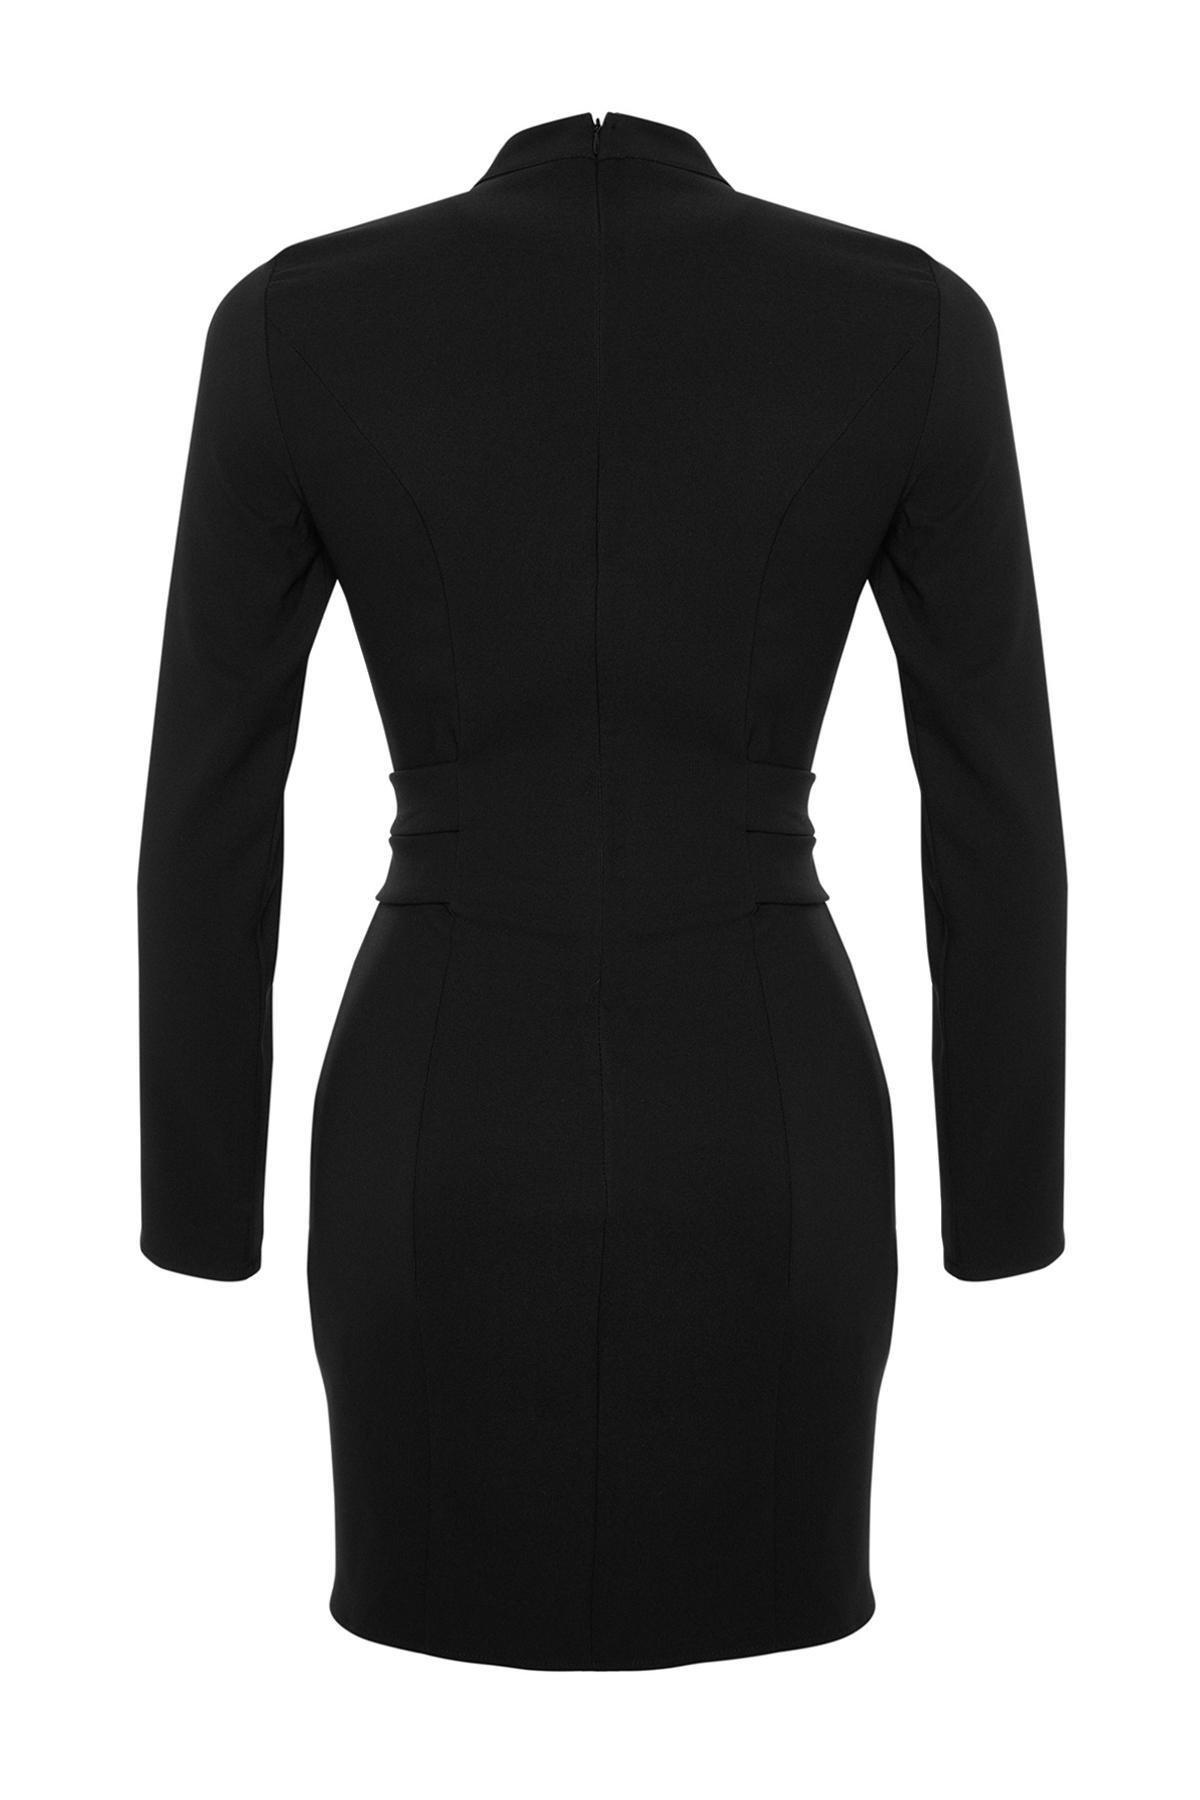 Trendyol - Black Collared A-Line Dress